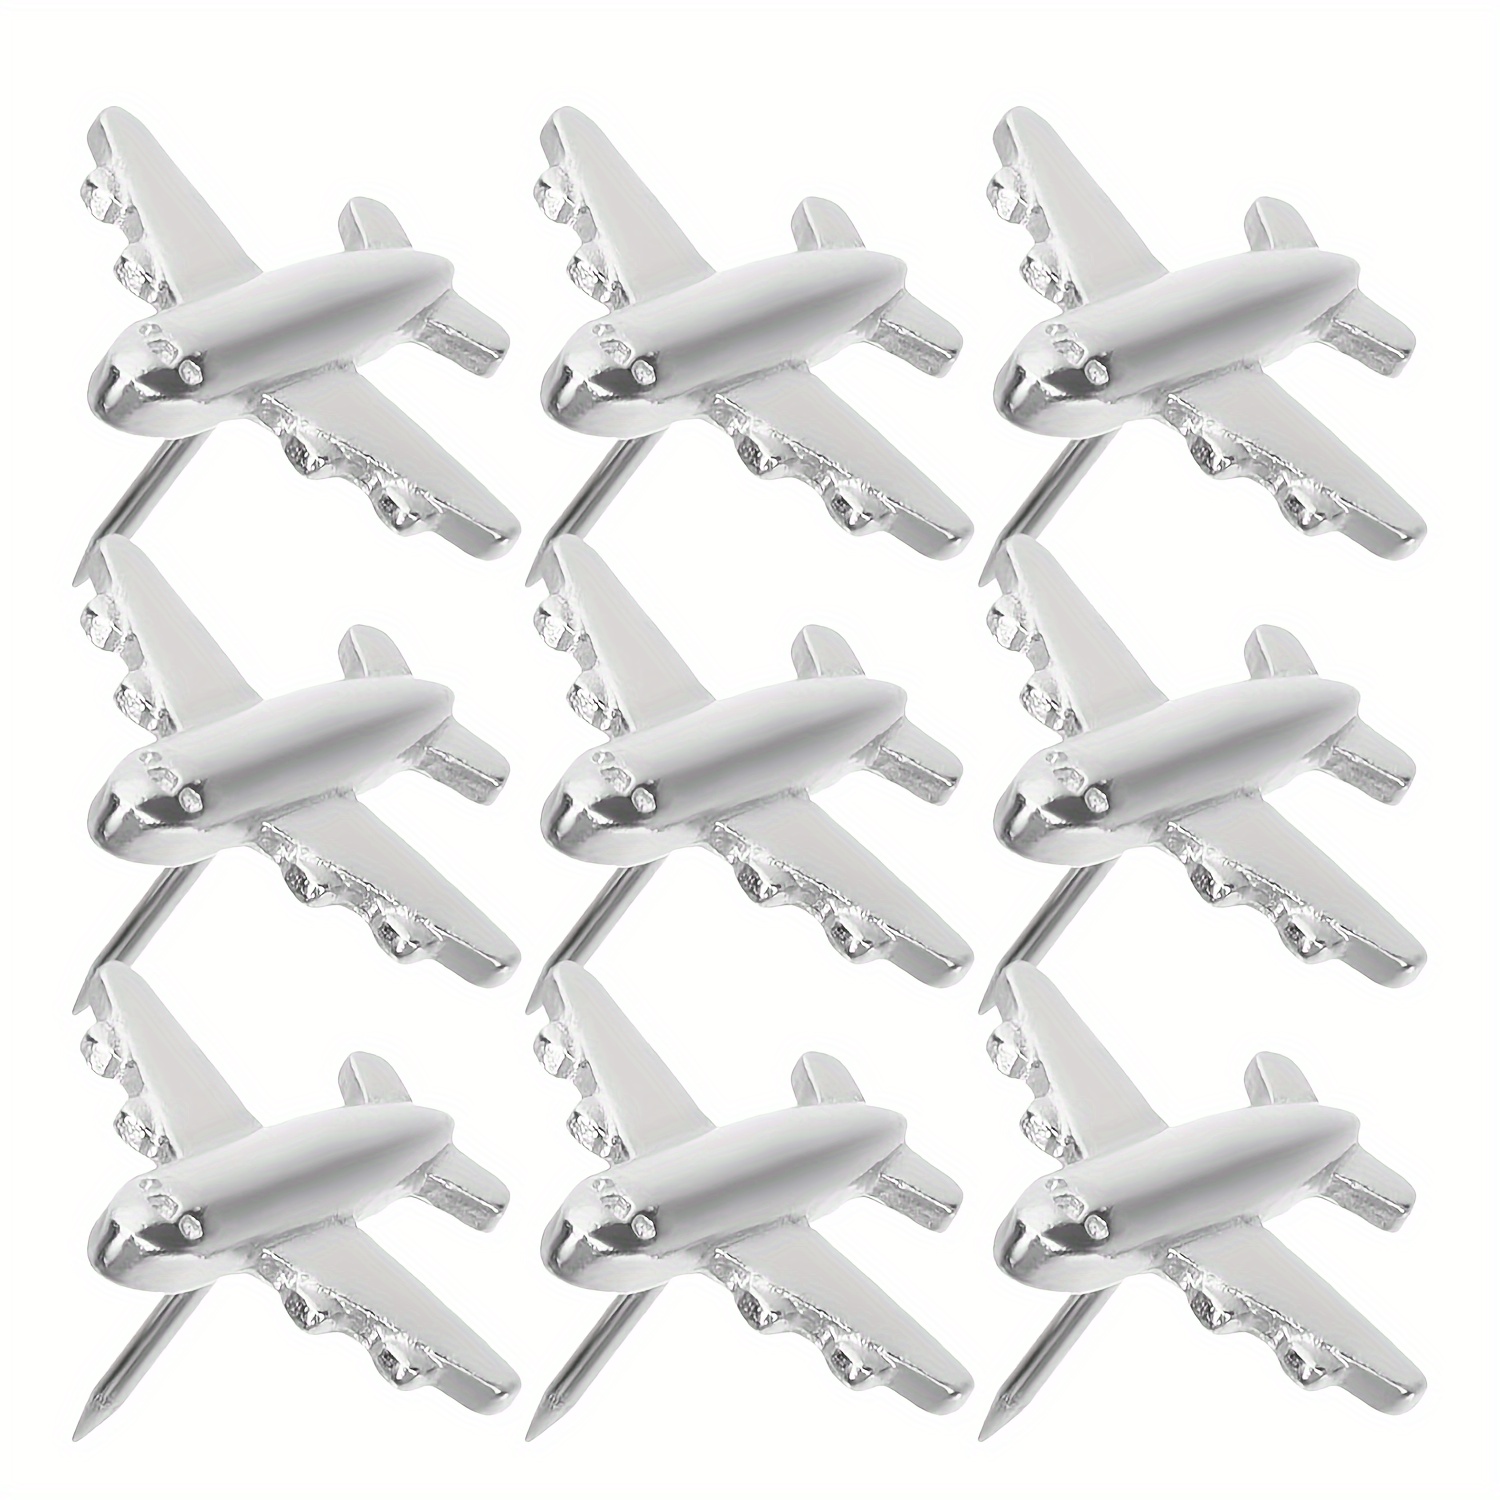 

12pcs Airplane-shaped Metal Push Pins - Durable Thumbtacks For Bulletin Boards, Maps & Photos - Decorative Office Supplies